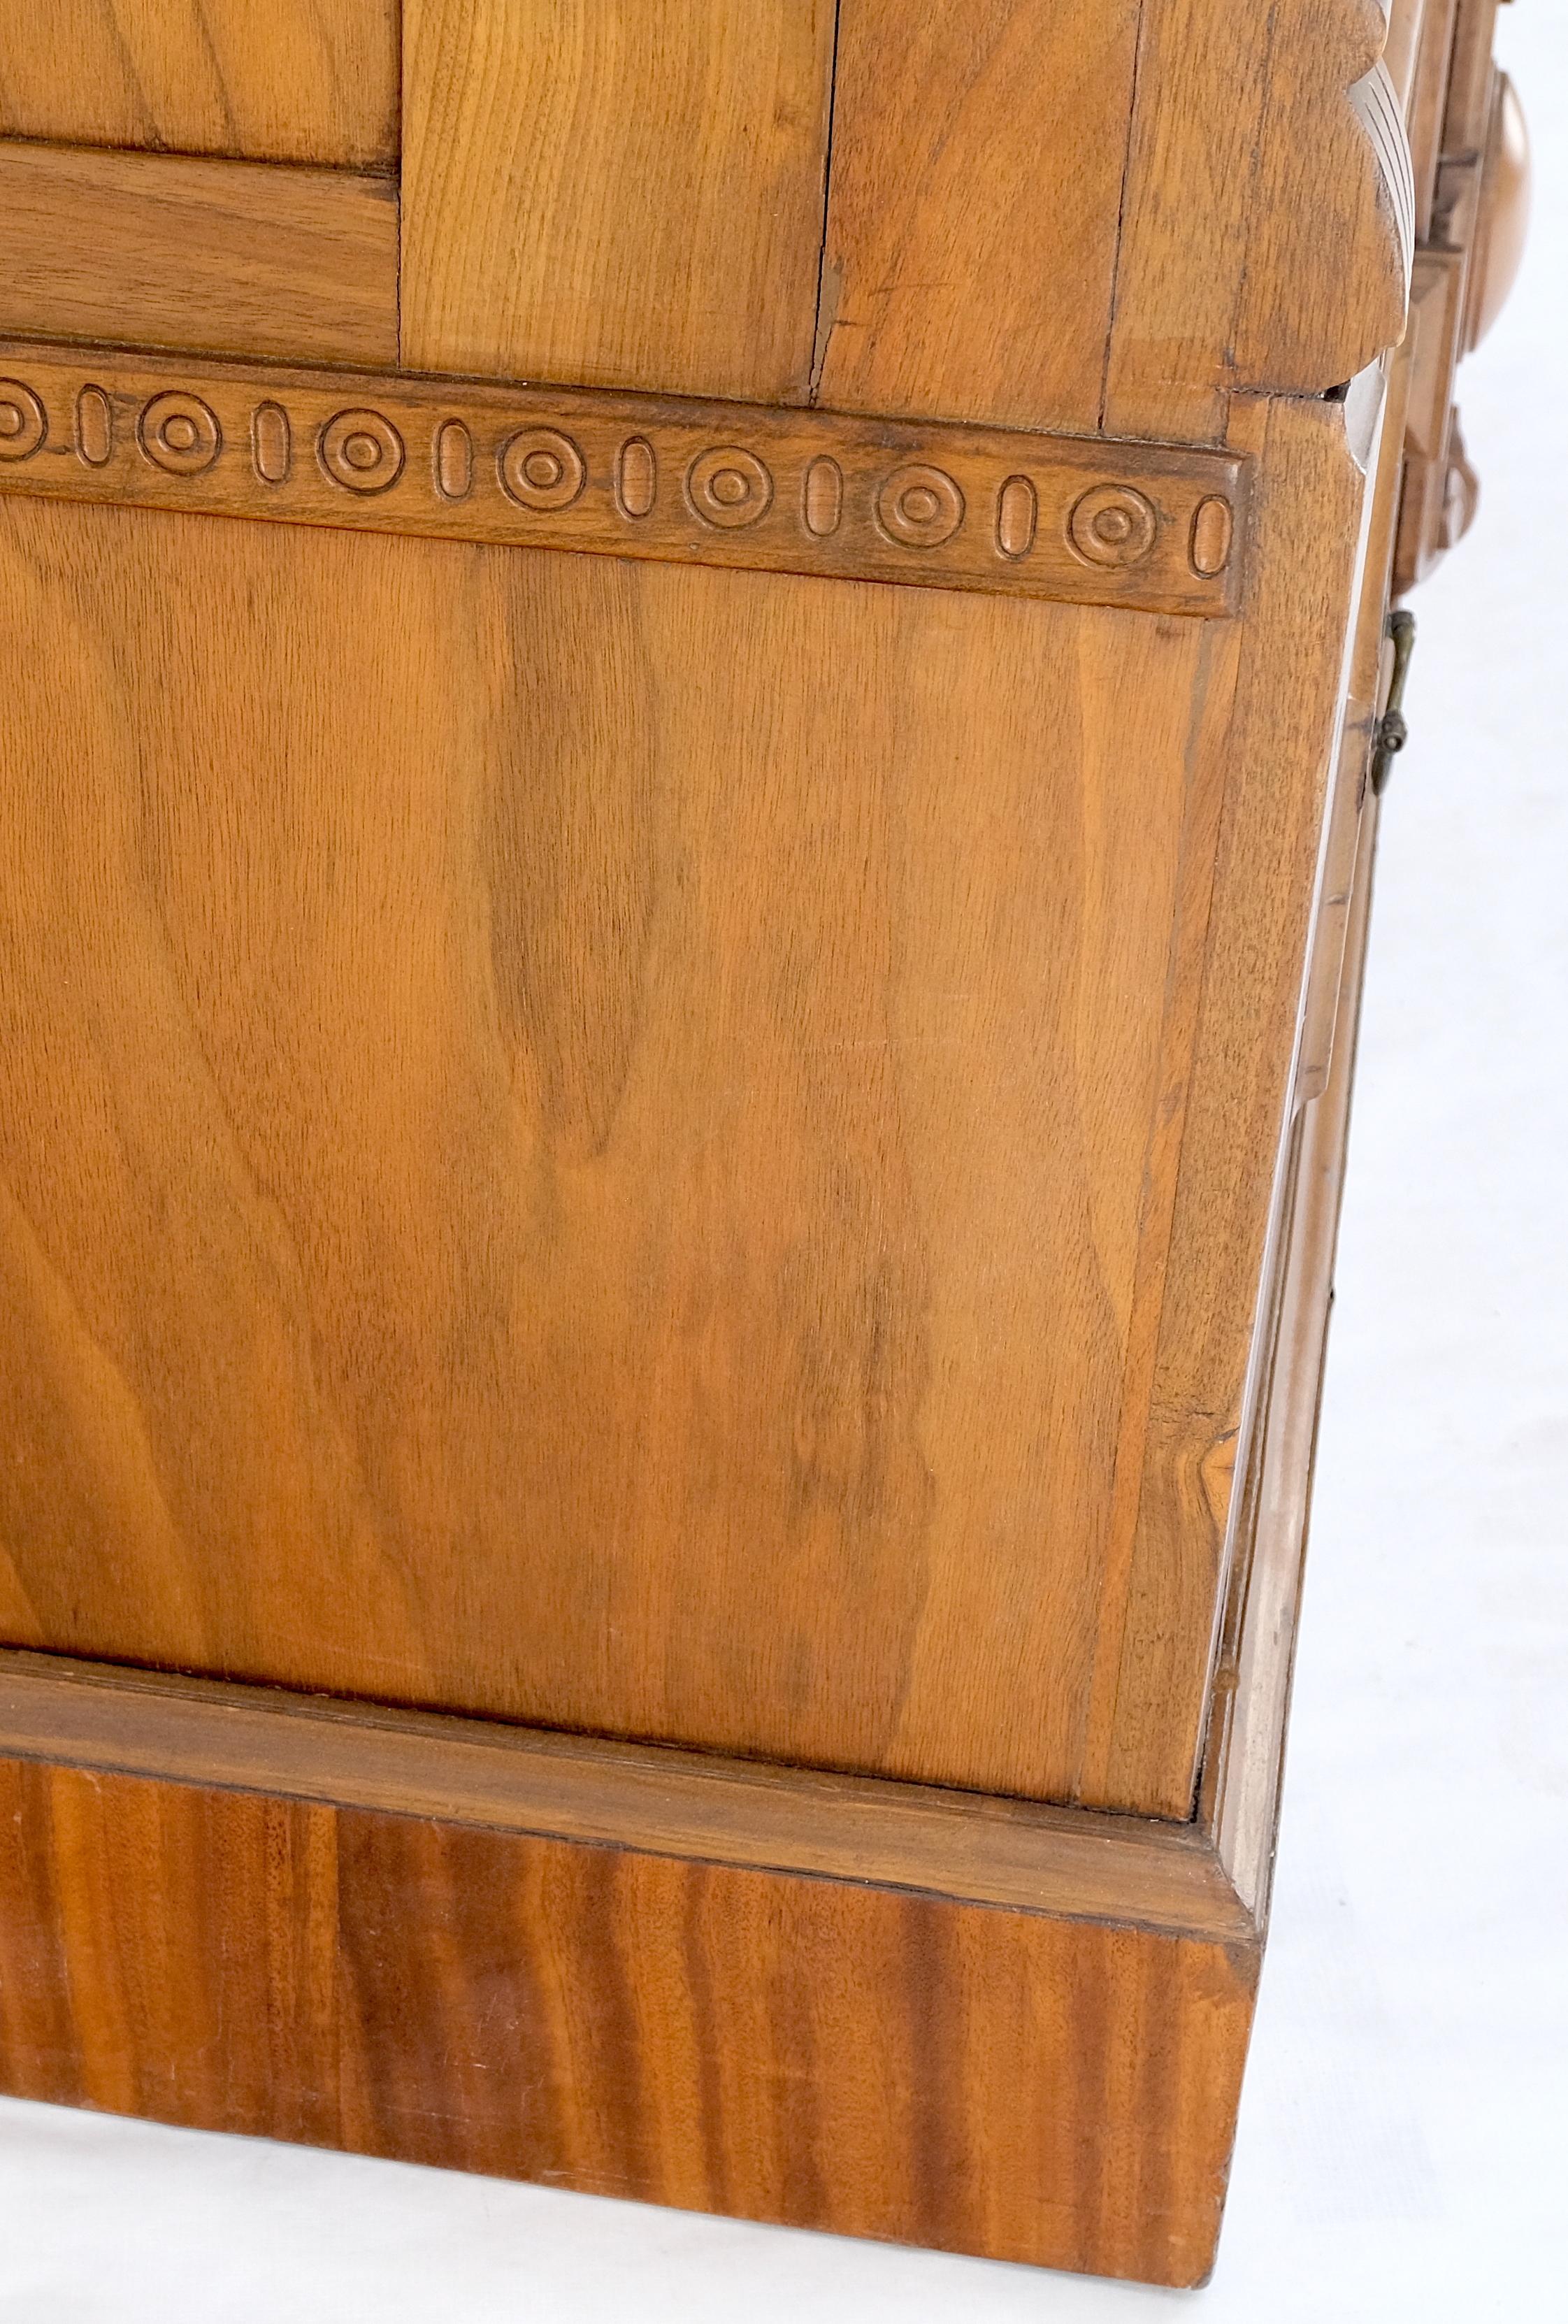 Burl Walnut Adjustable Shelves Two Doors One Drawer Antique Bookcase Cabinet For Sale 2